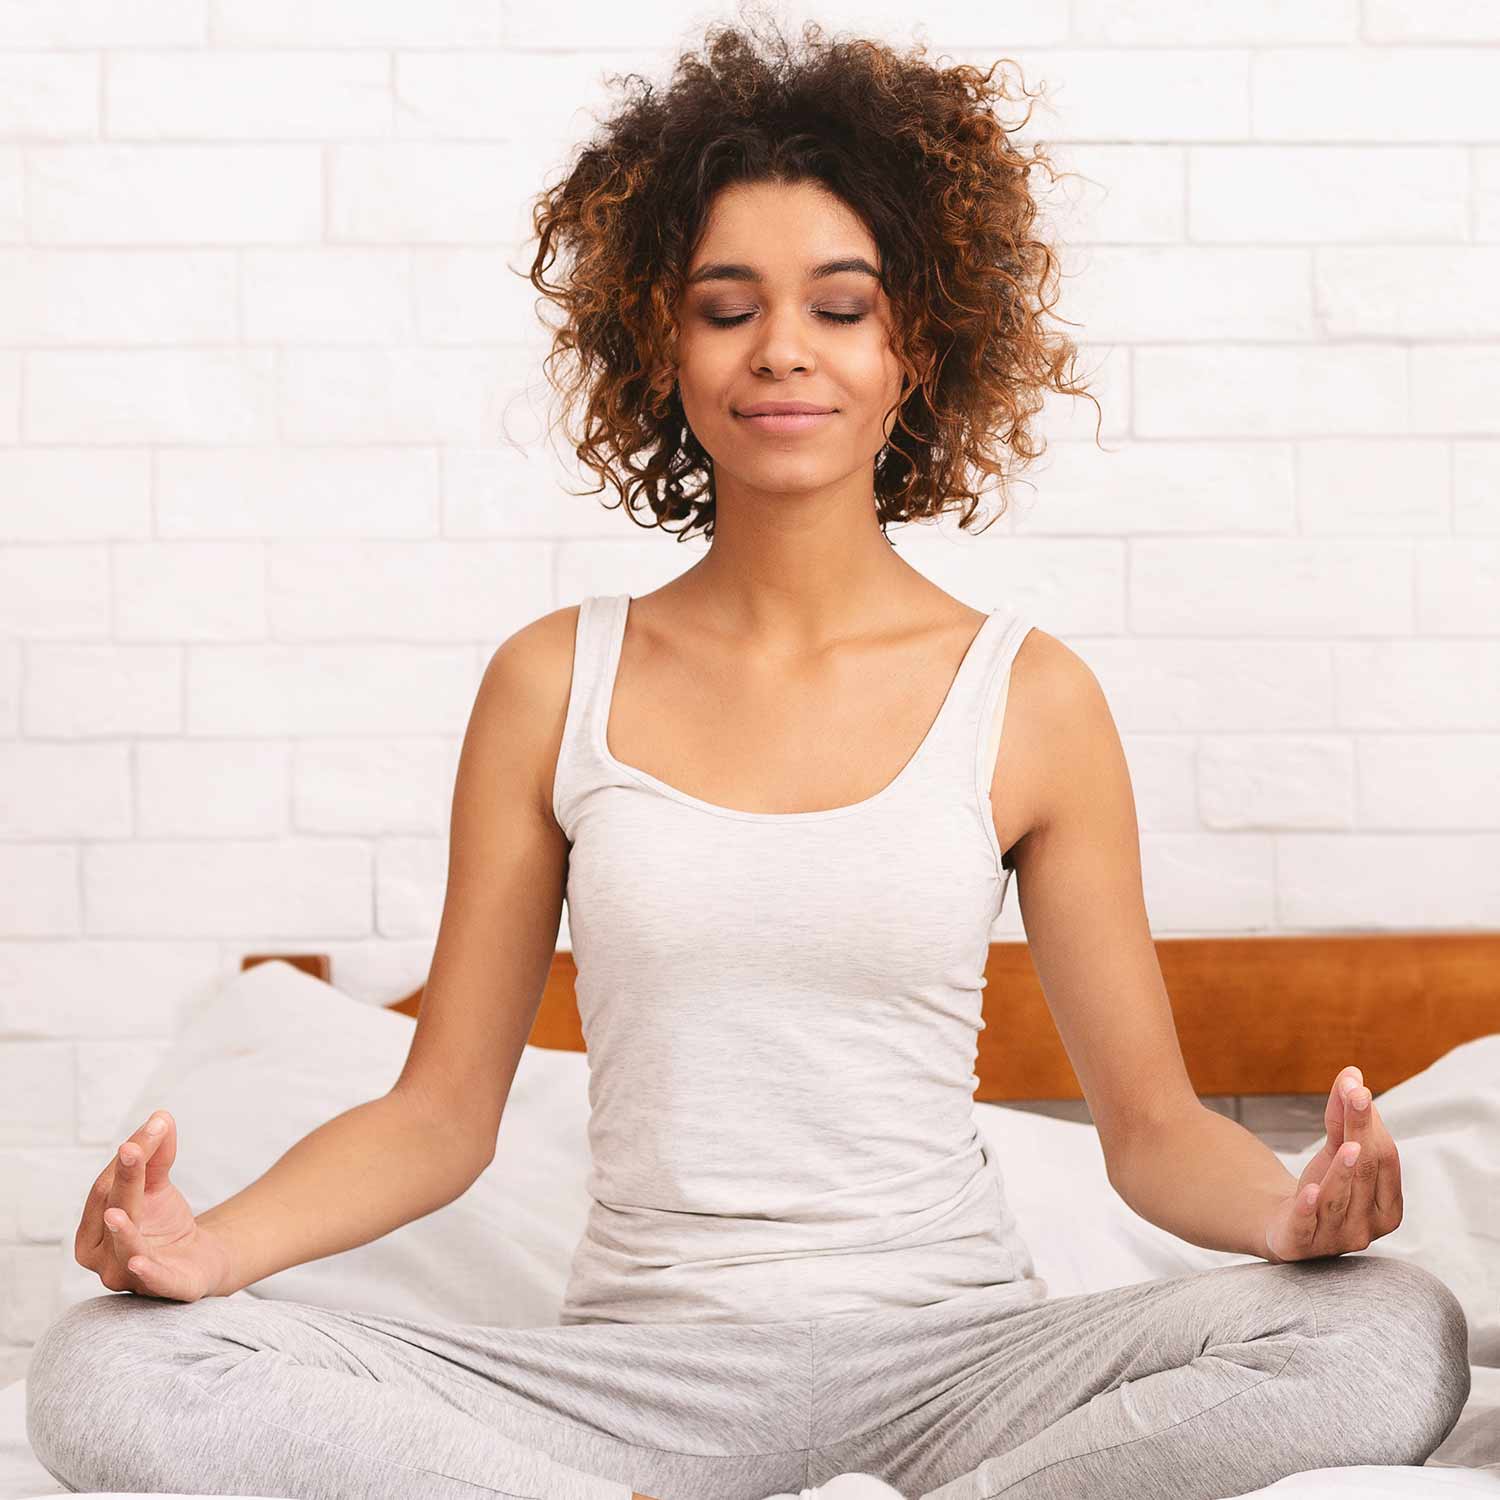 woman doing yoga calmly